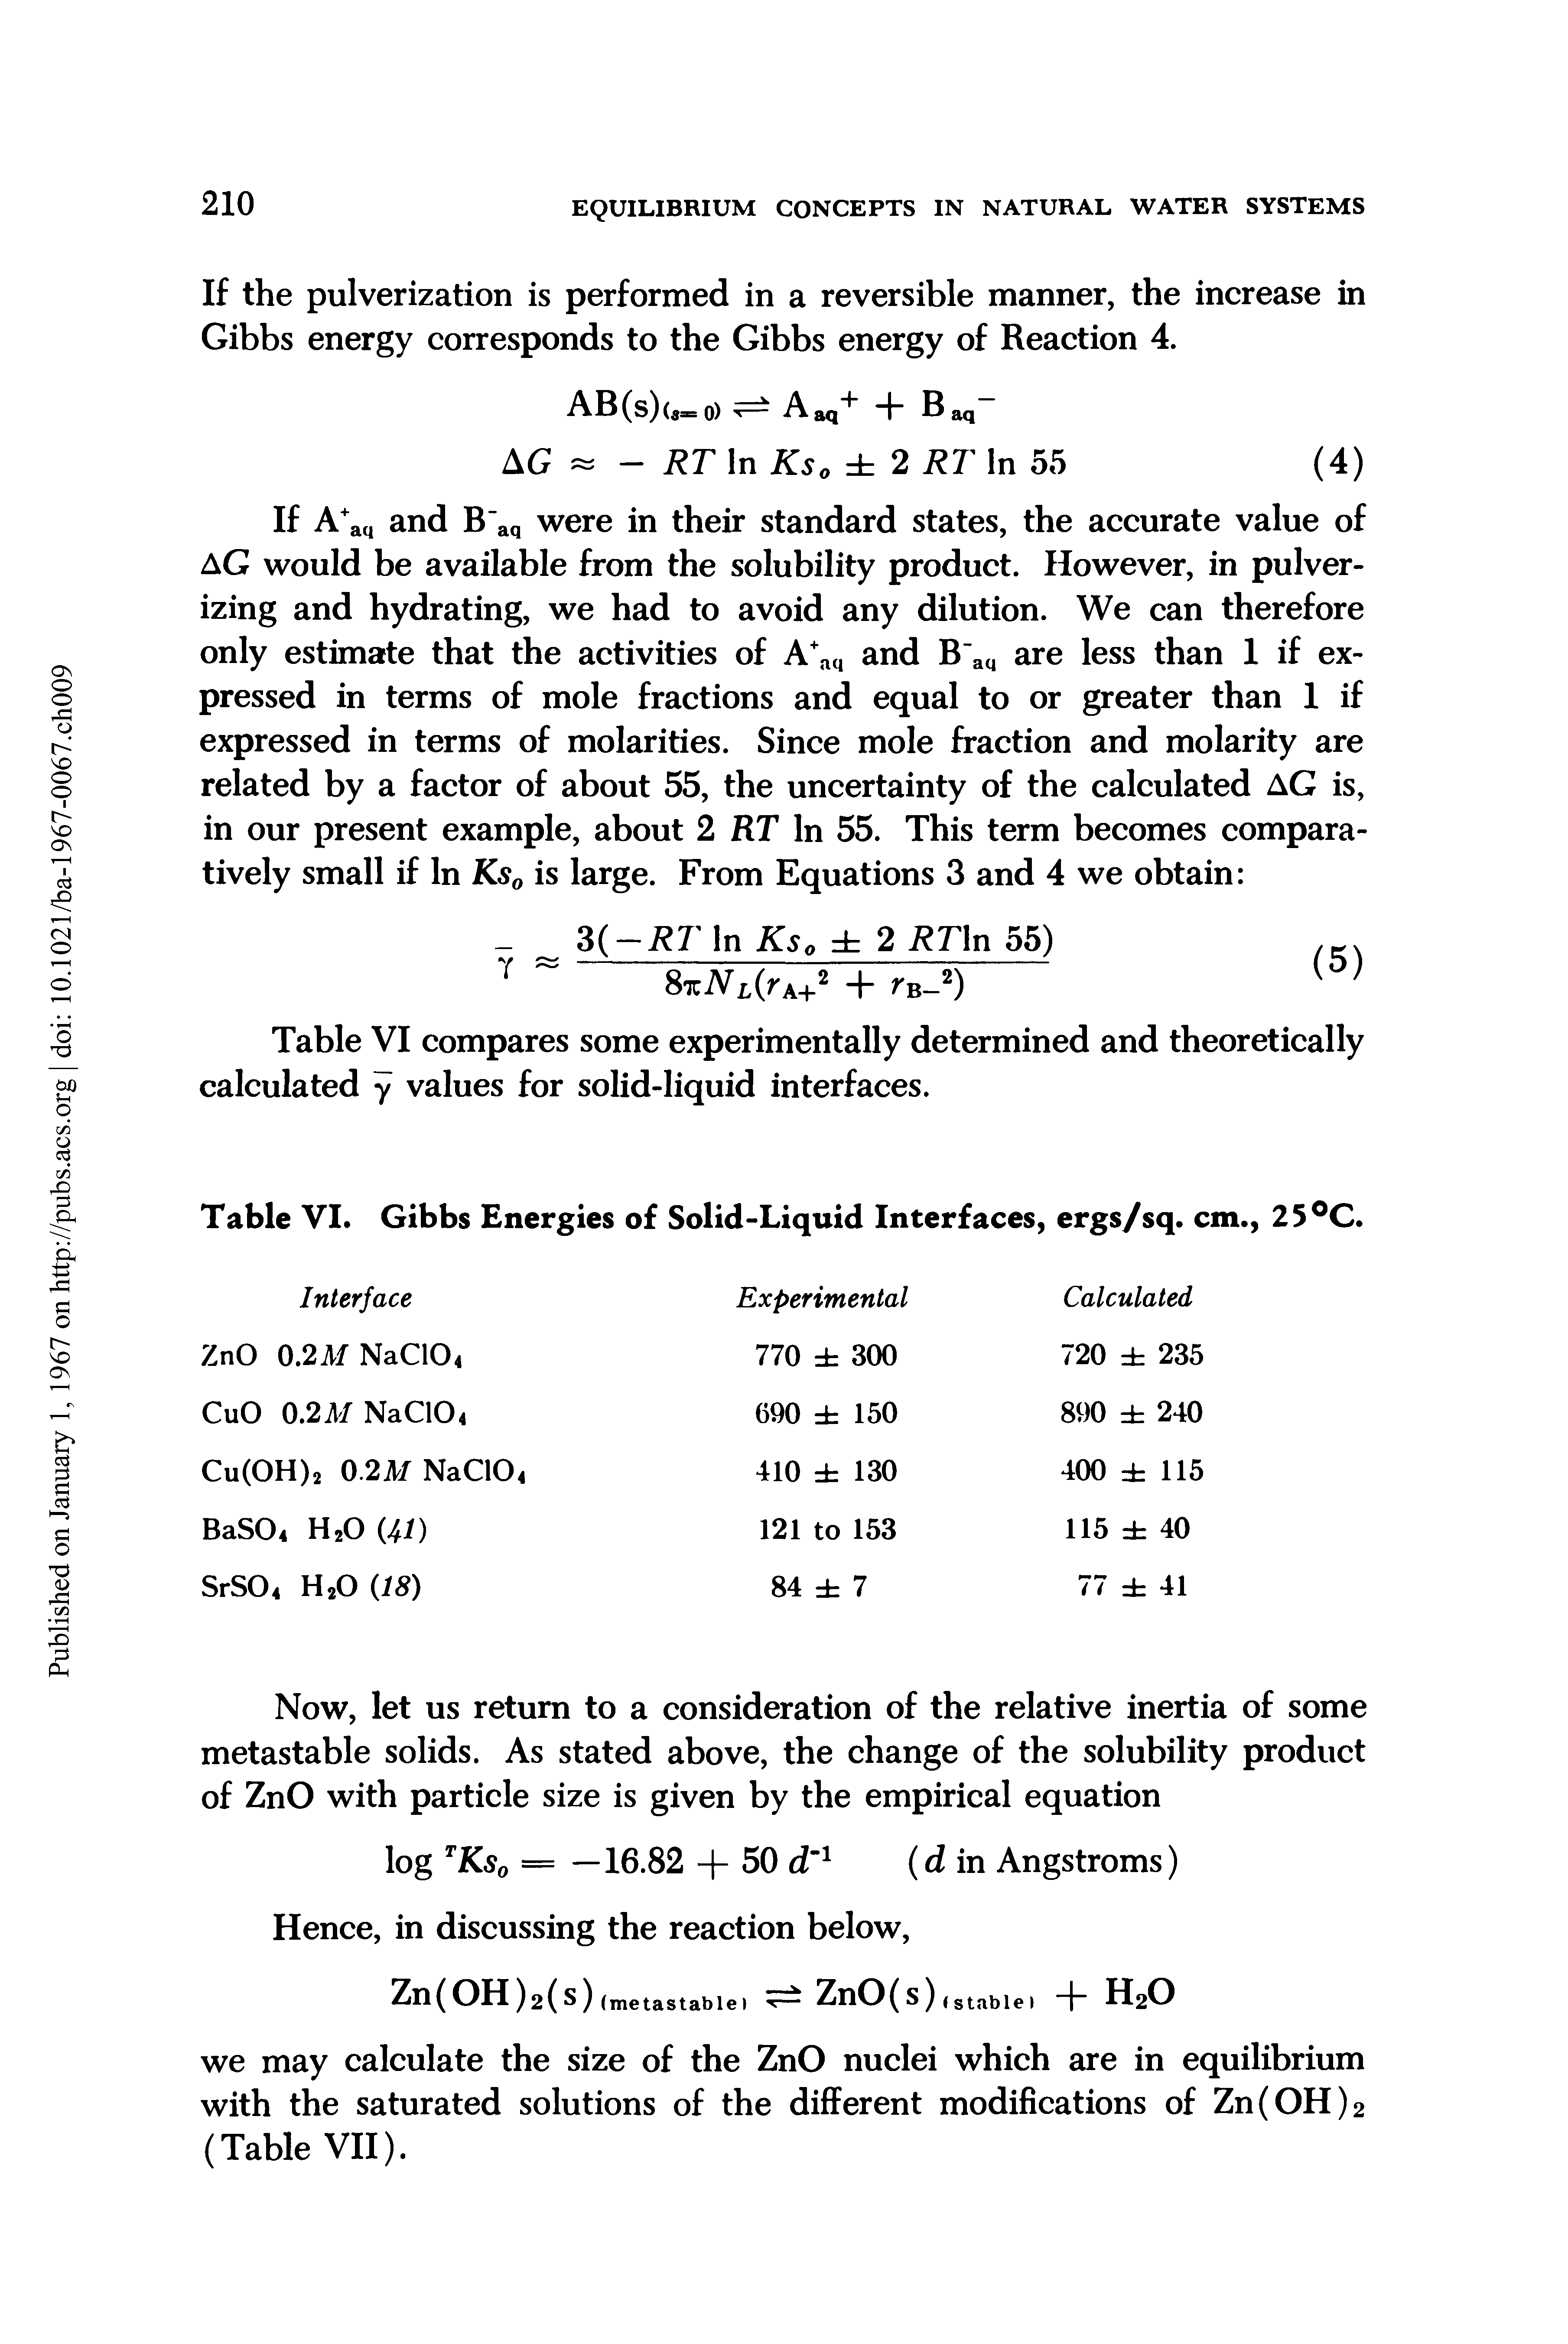 Table VI. Gibbs Energies of Solid-Liquid Interfaces, ergs/sq. cm., 25°C.